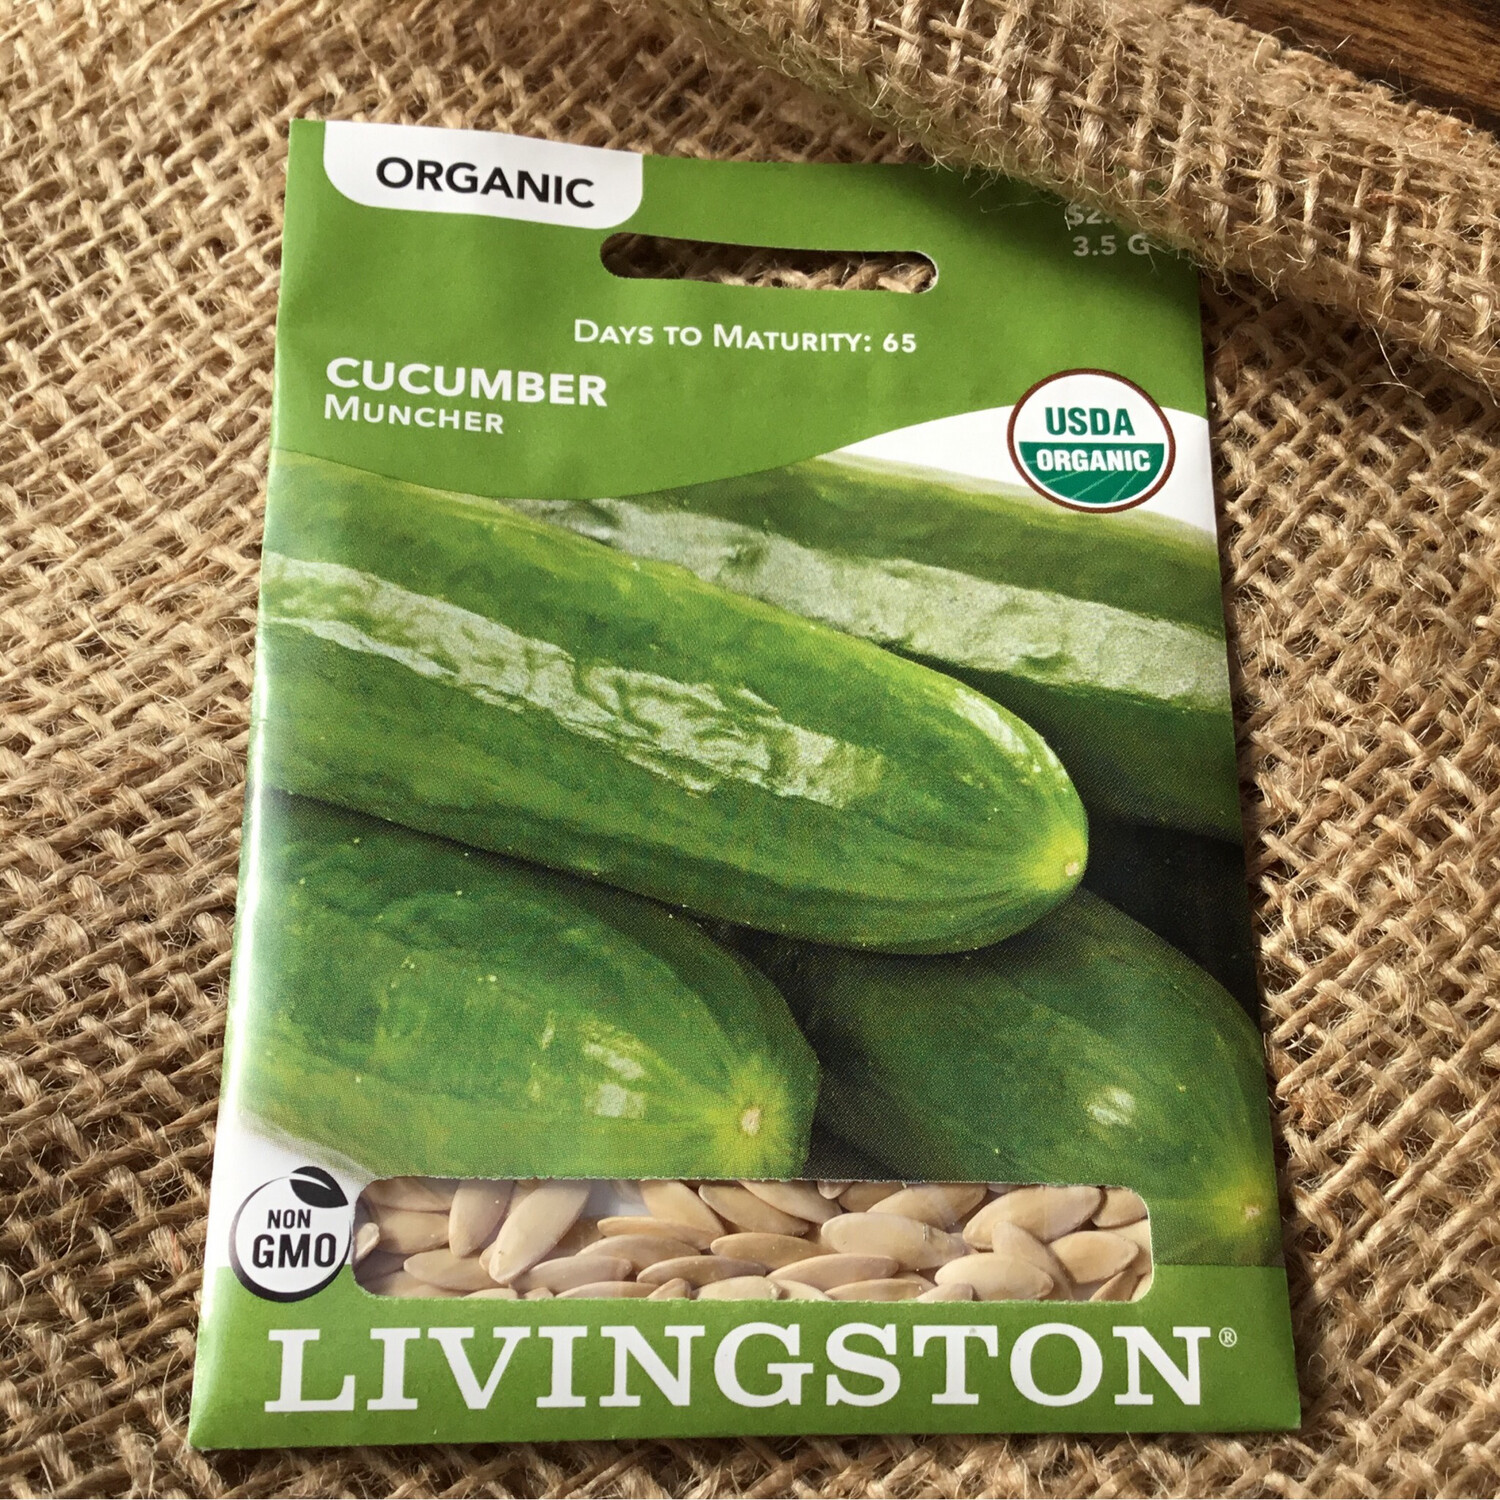 (Seed) Organic Cucumber Muncher $3.79